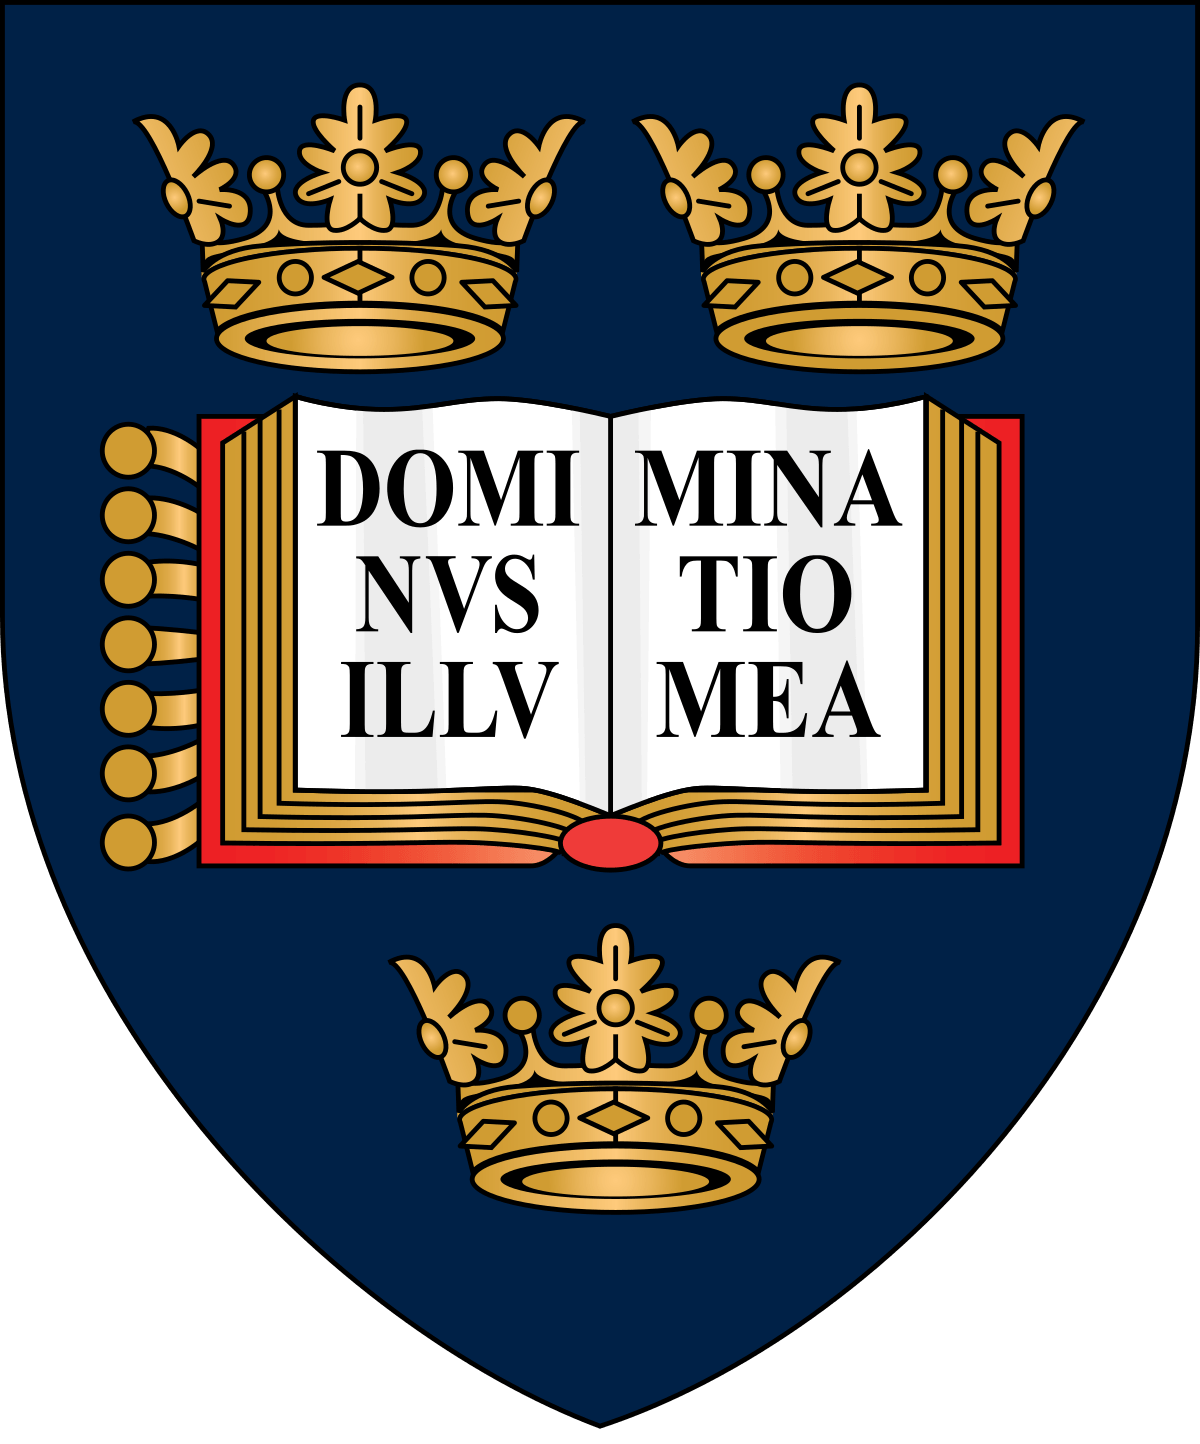 And U of U Mascot Logo - University of Oxford